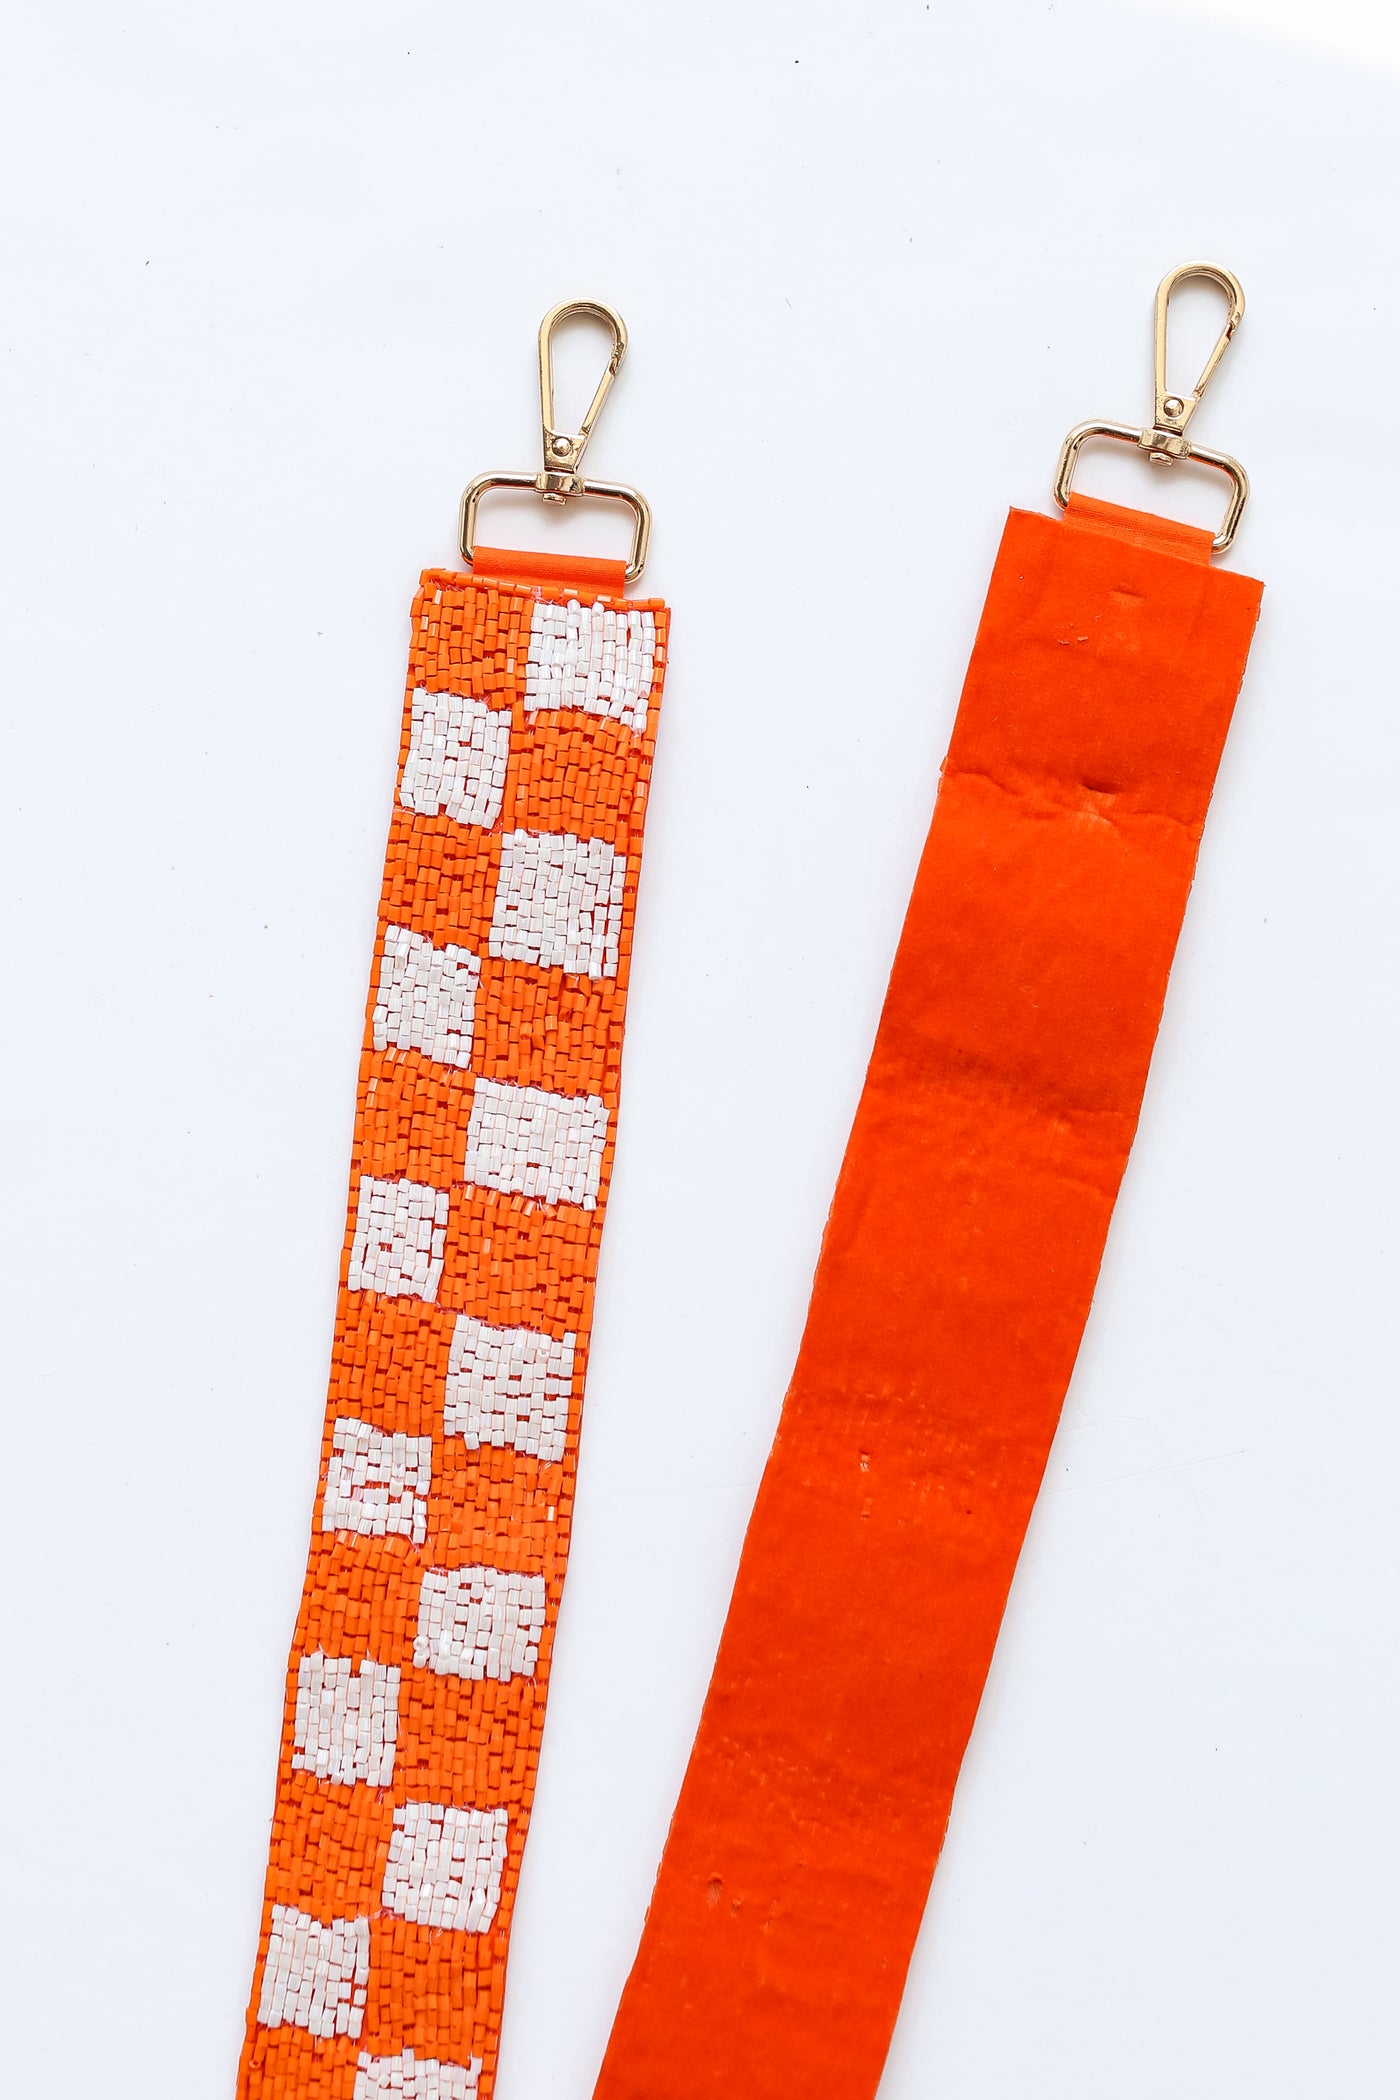 Orange + White Checkered Beaded Purse Strap close up view